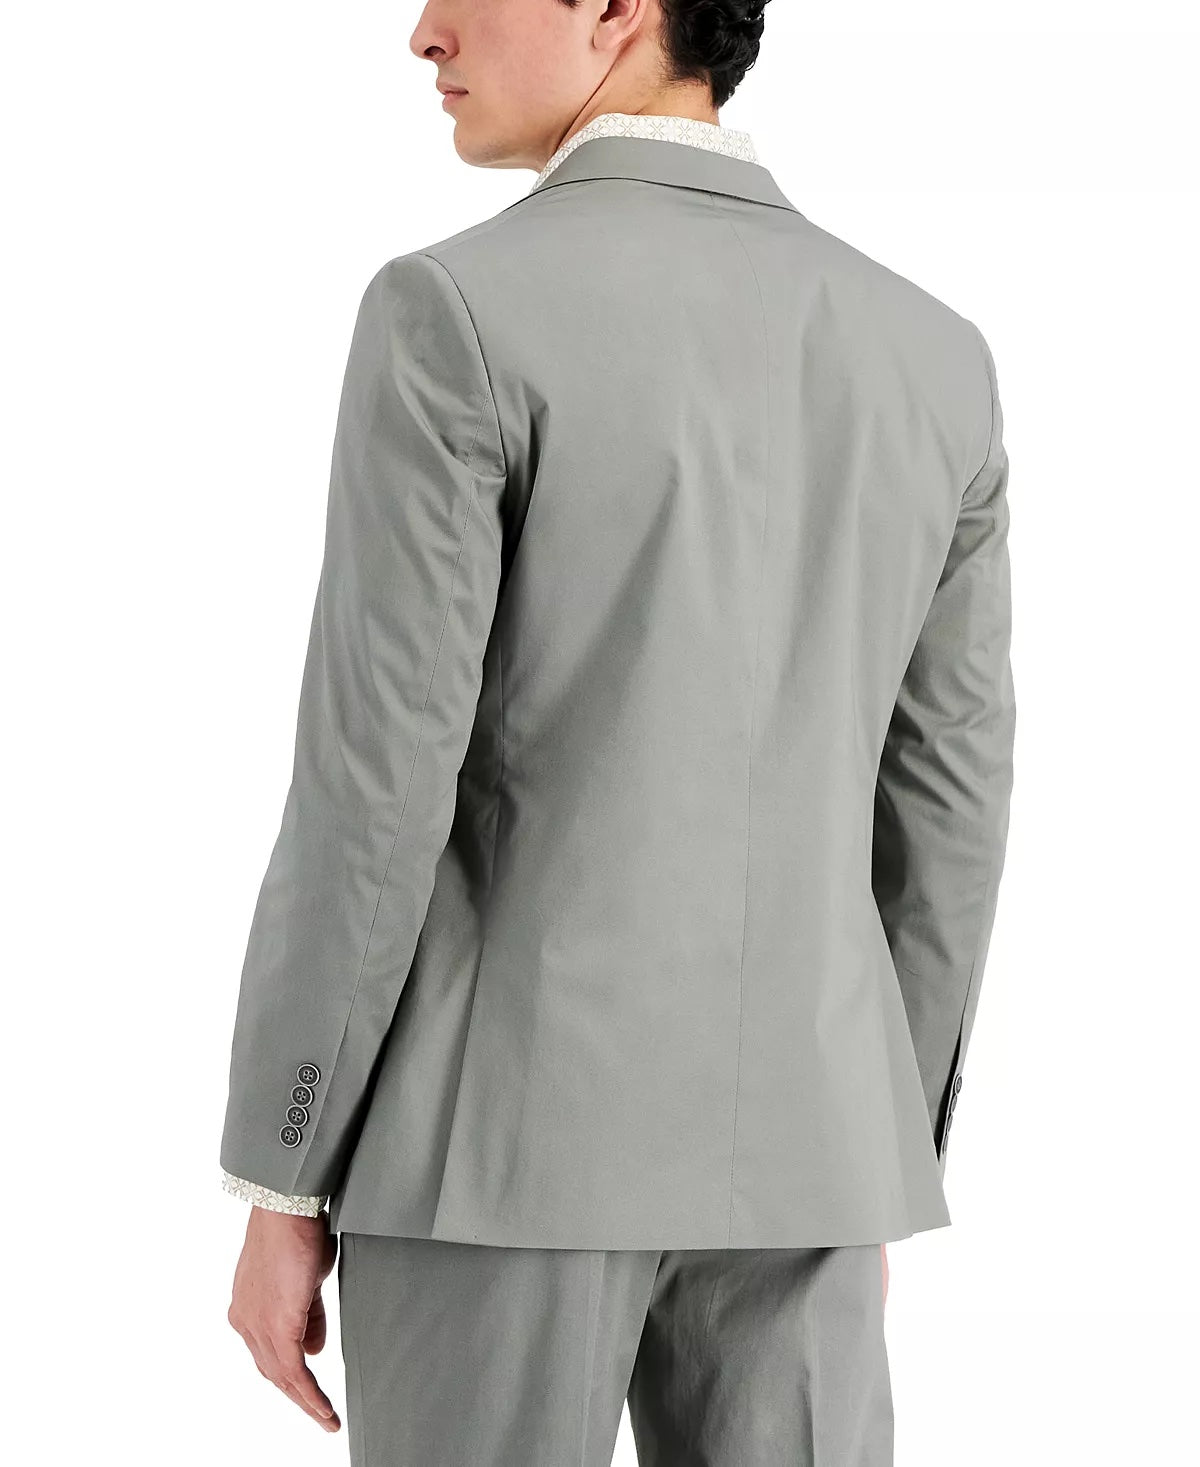 NAUTICA Men's Suit Jacket Grey 40R Modern-Fit Stretch Cotton Solid